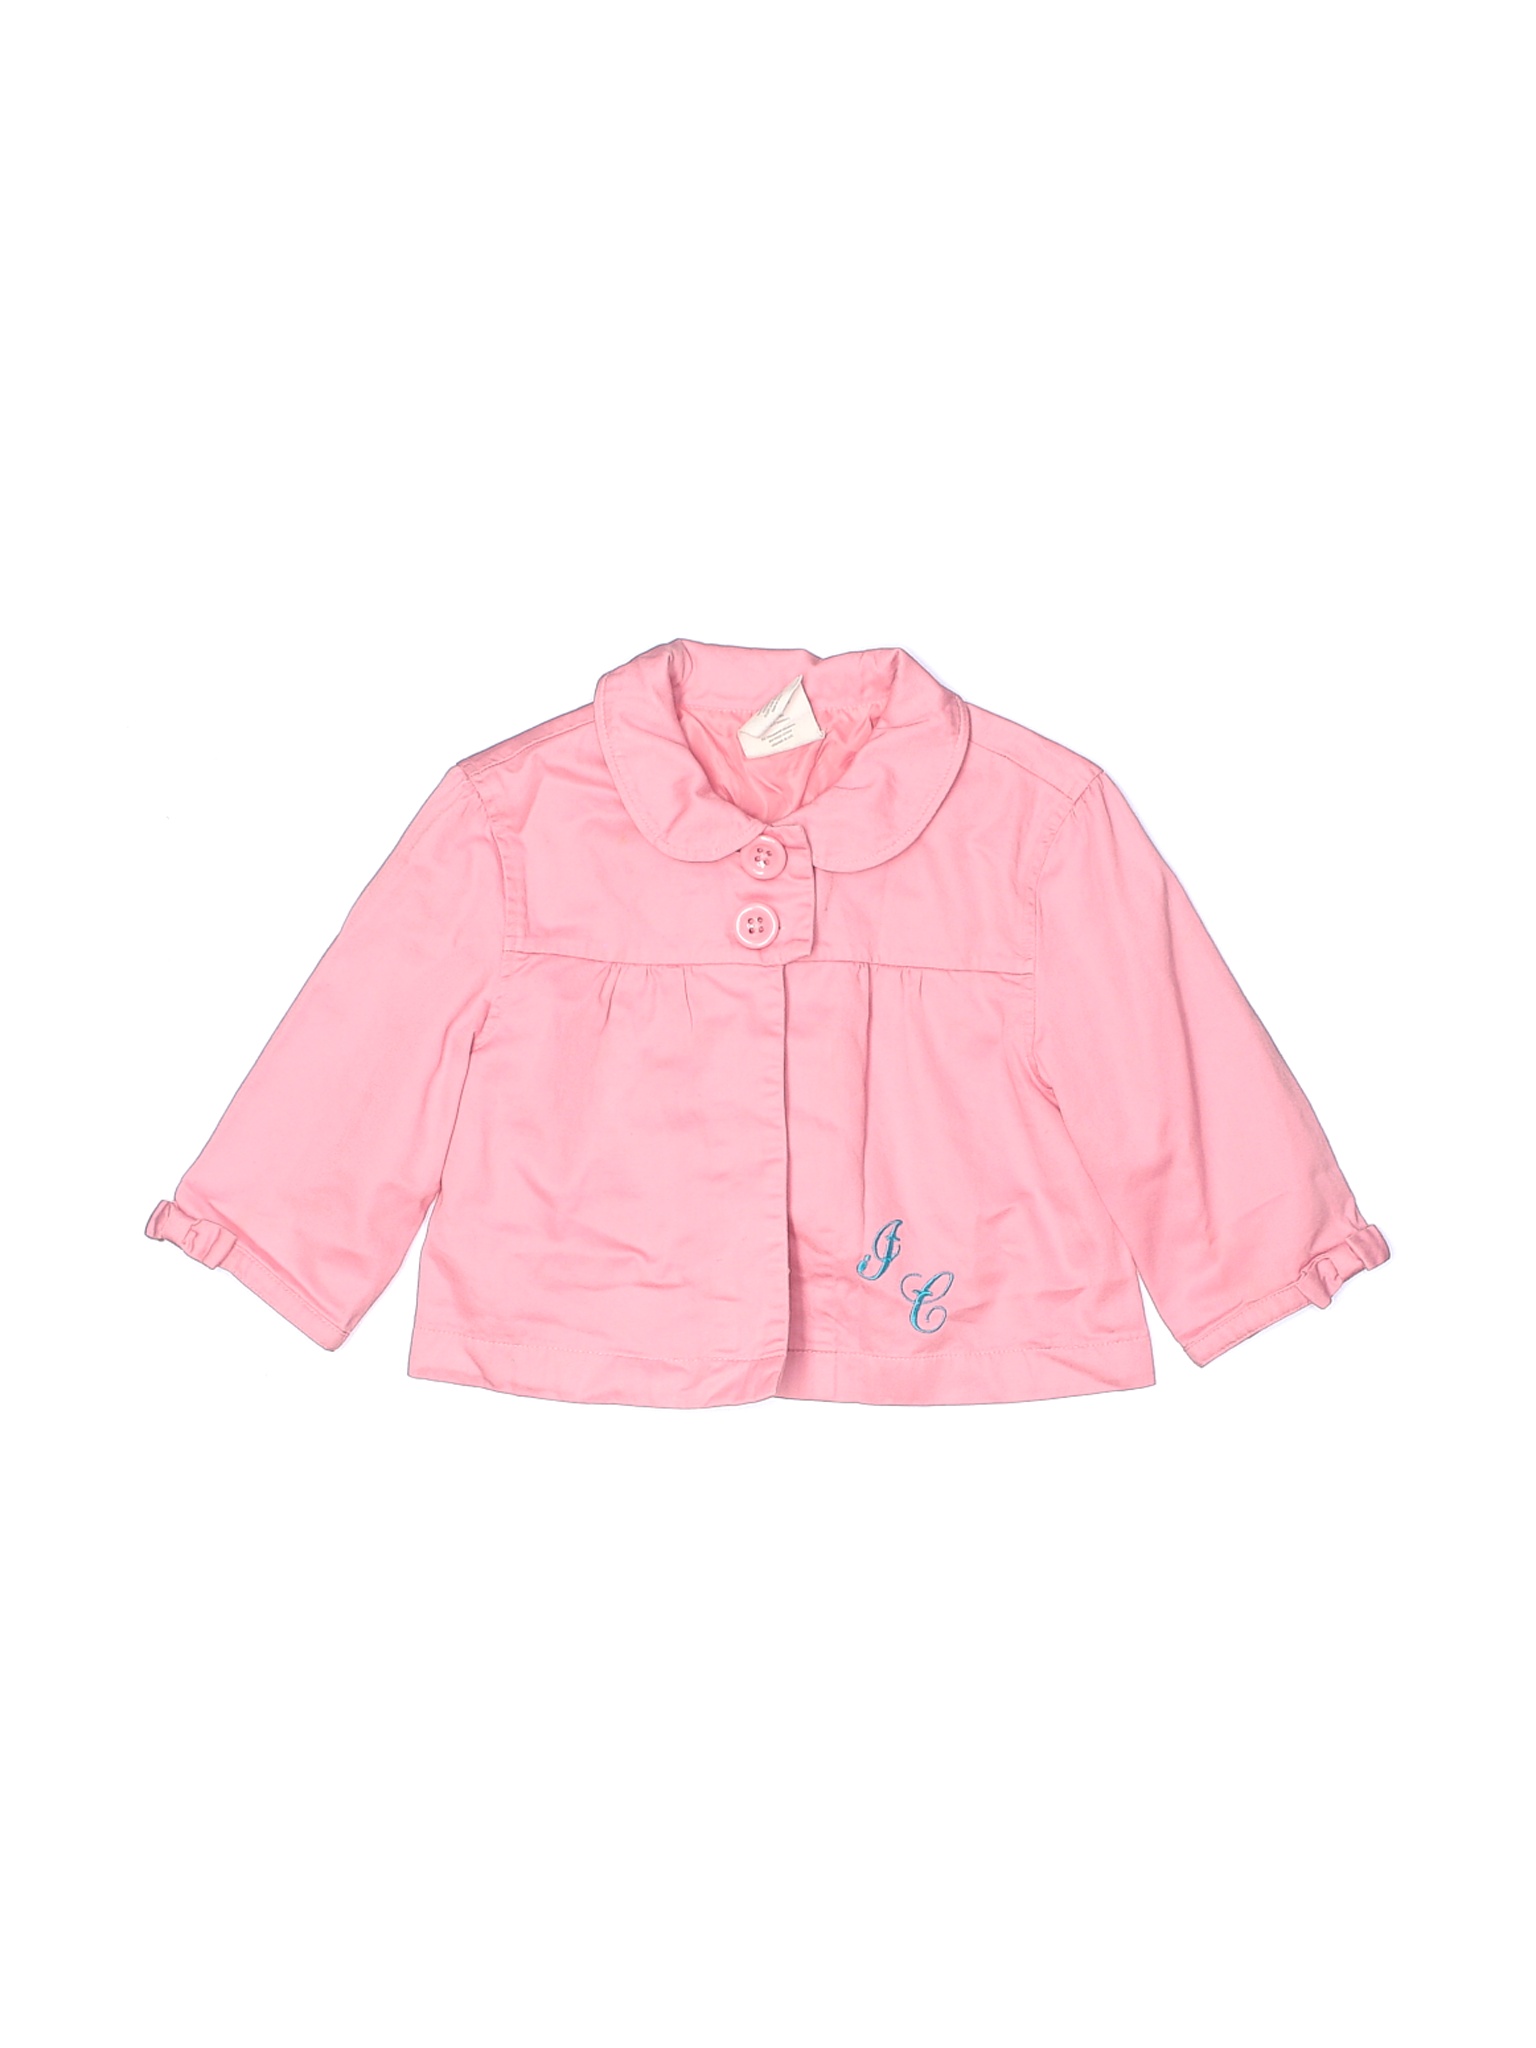 Crazy 8 Girls Pink Jacket 7 | eBay